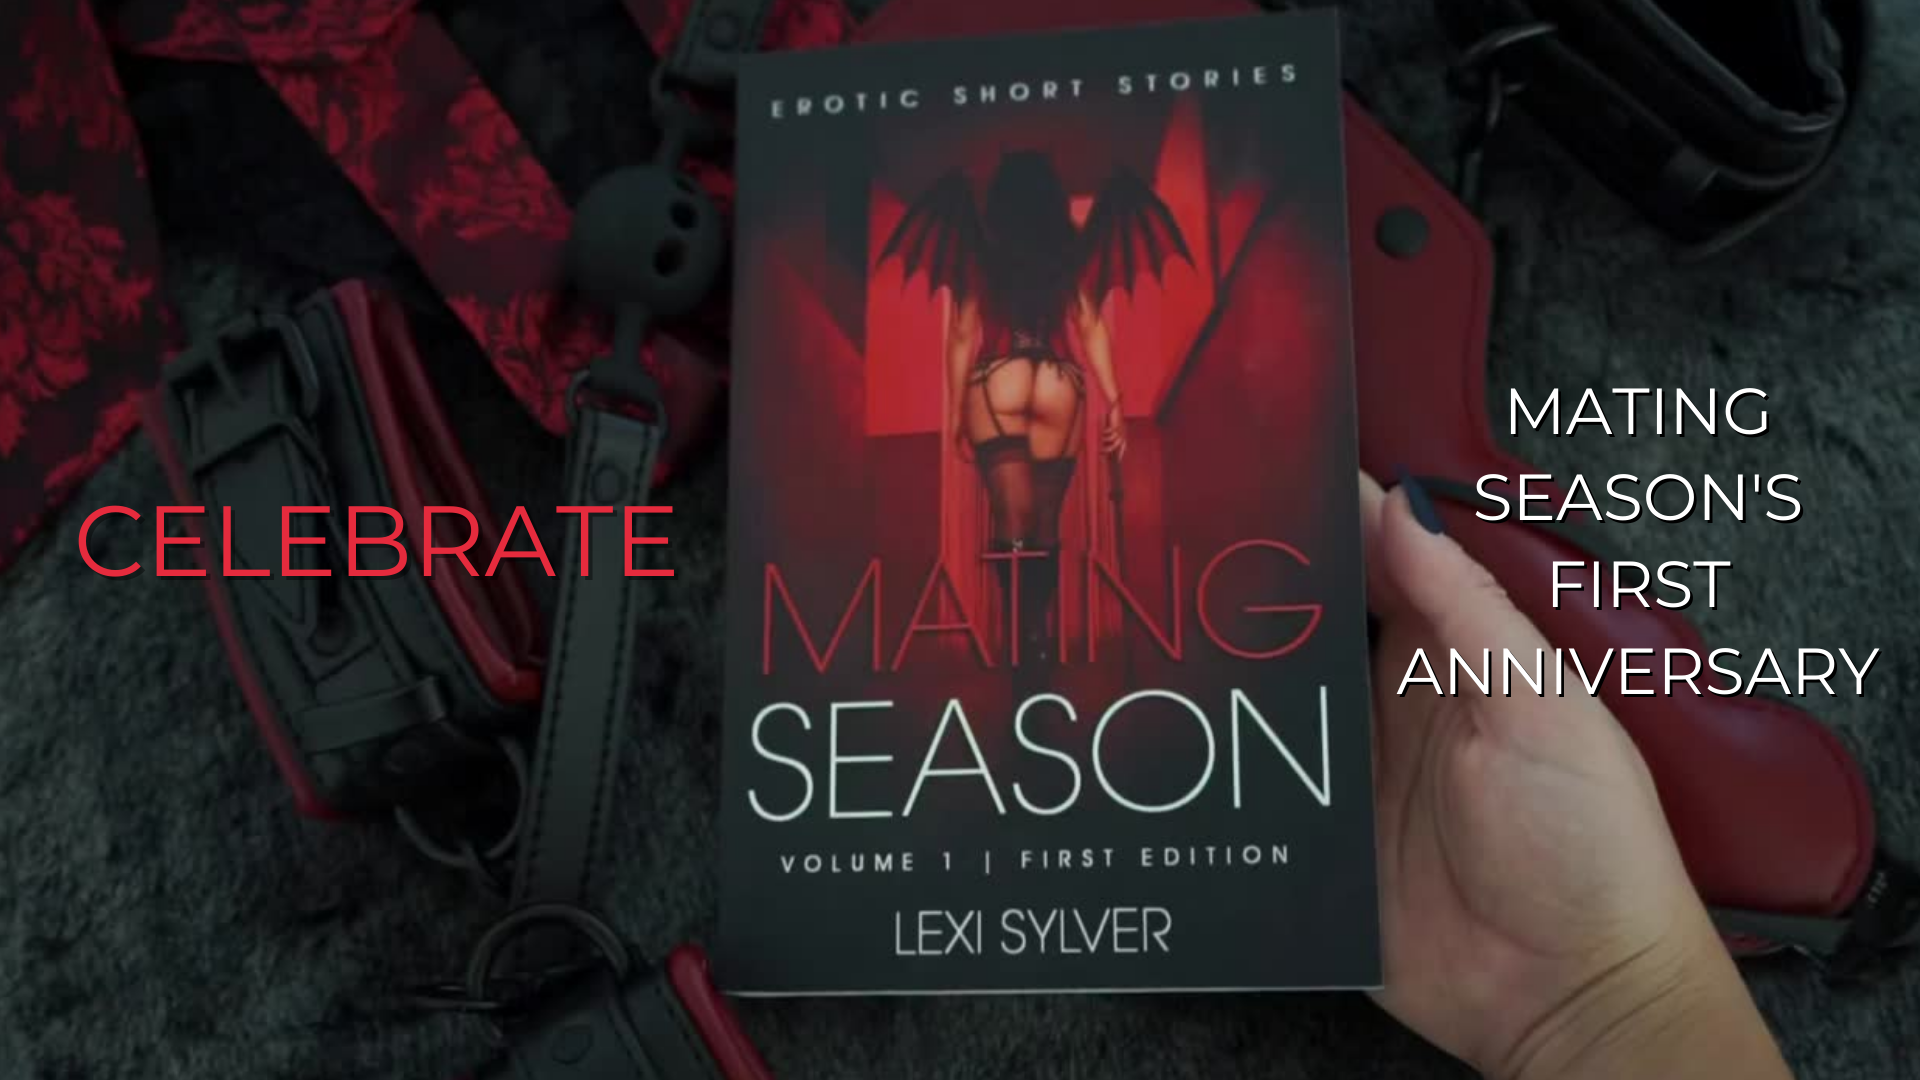 Mating Season Erotic Short Stories Lexi Sylver Anniversary Party